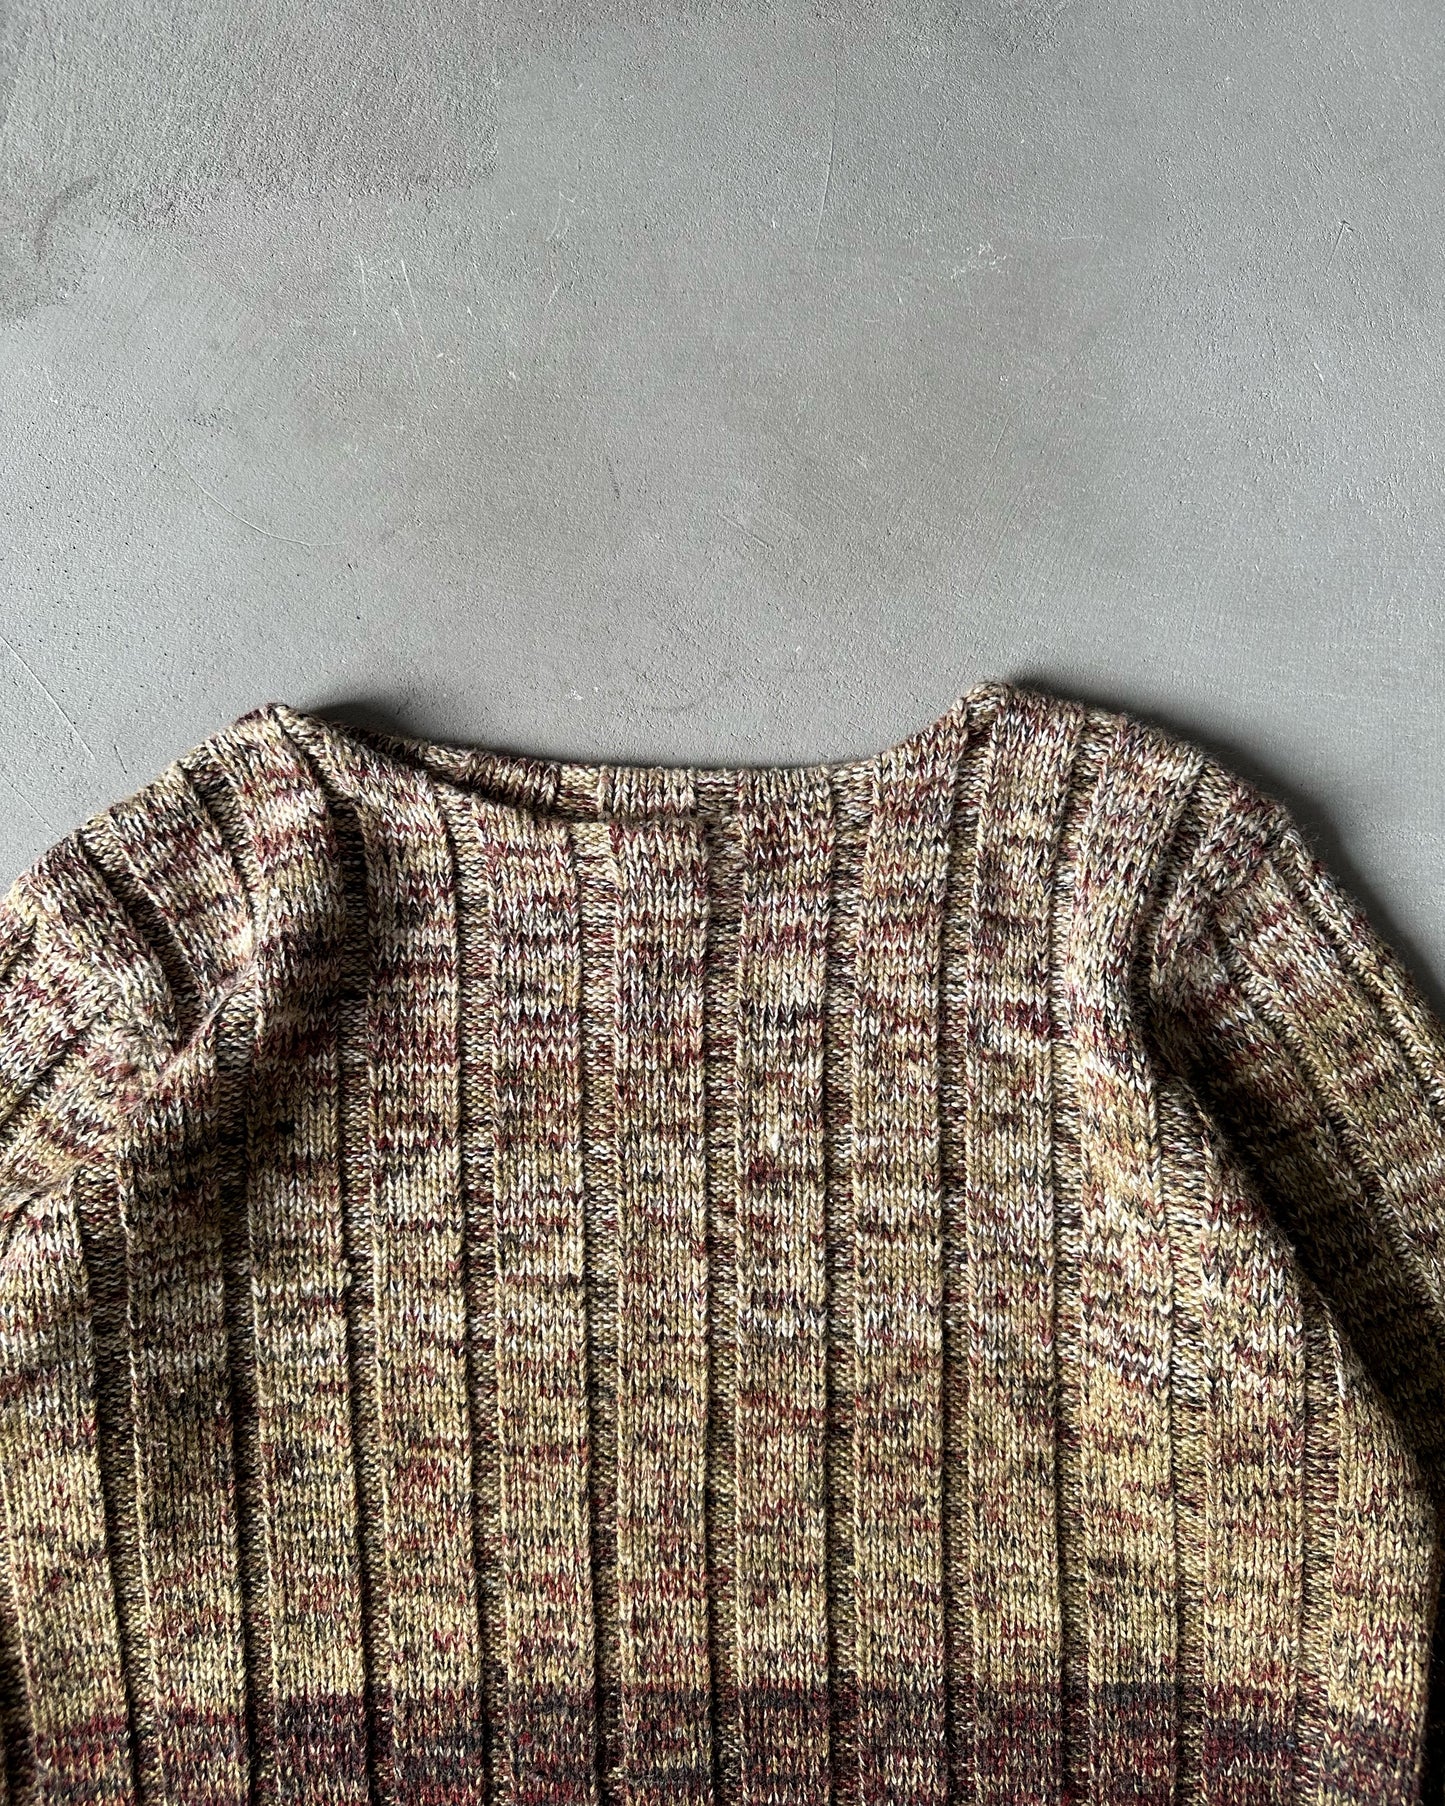 1990s - Beige/Brown Striped Sweater - (W)XL